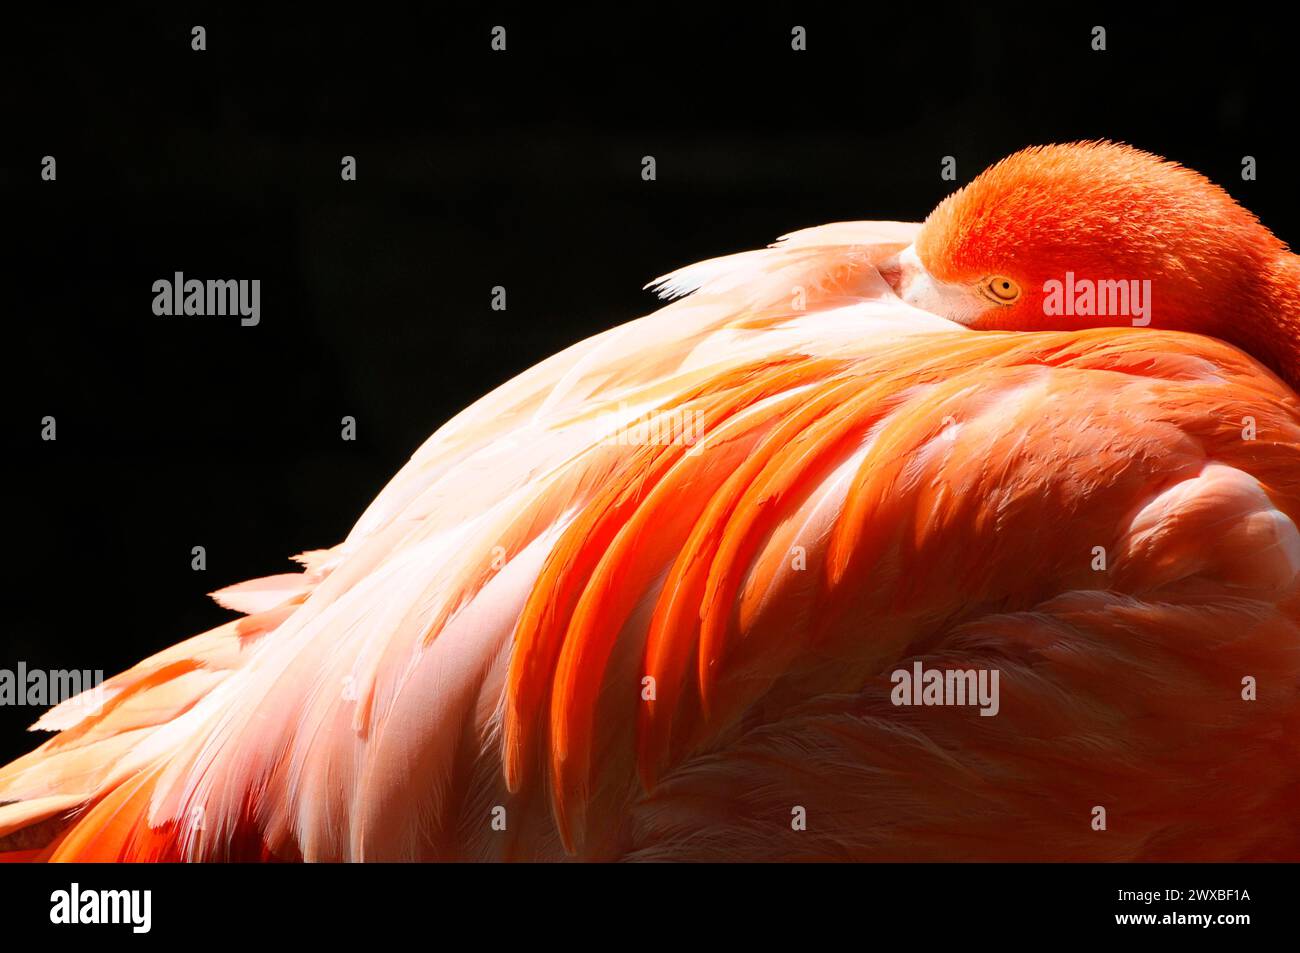 A sleeping flamingo (Phoenicopterus ruber) captive, with bright orange feathers against a dark background, Leipzig, Germany Stock Photo